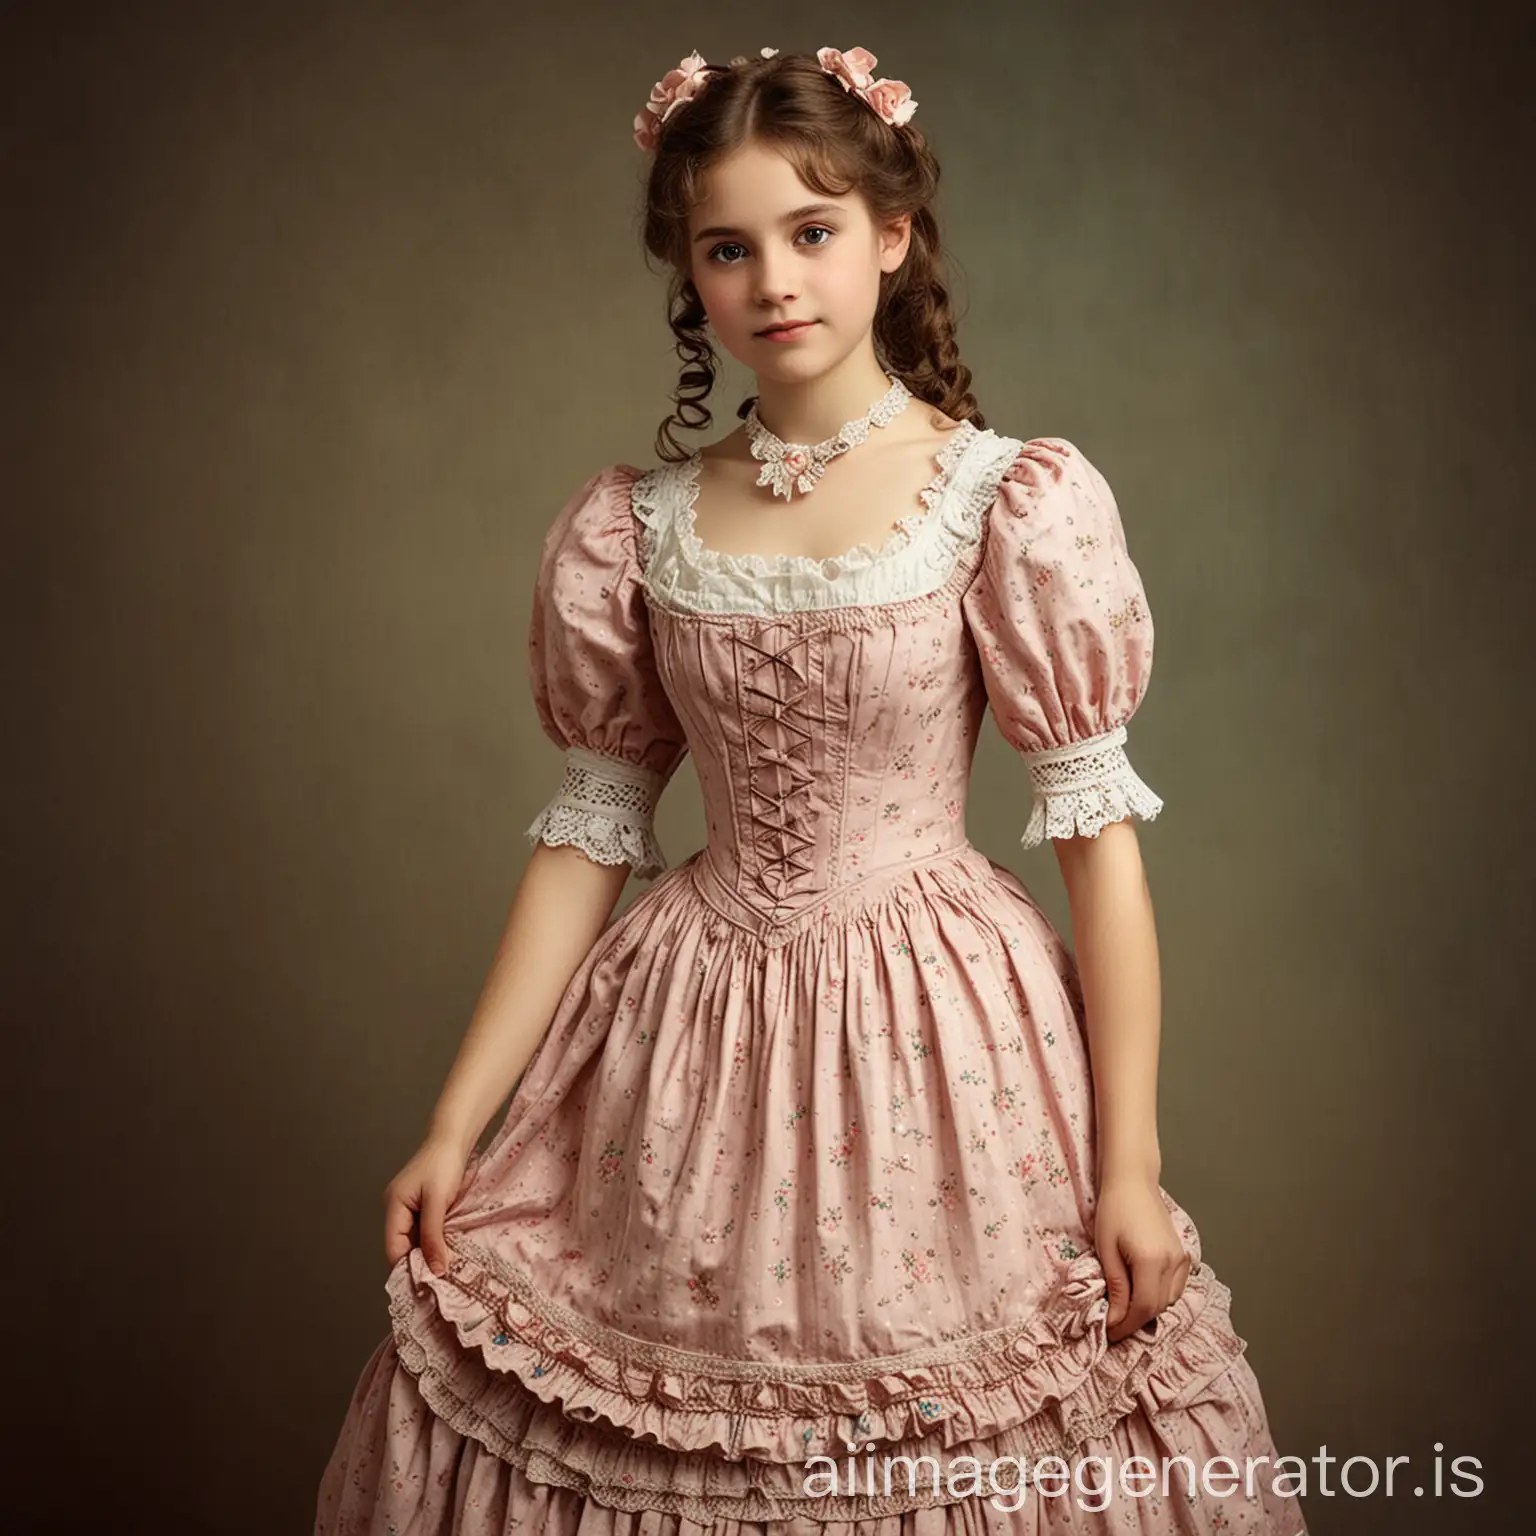 Victorian-Girl-in-Elegant-Dress